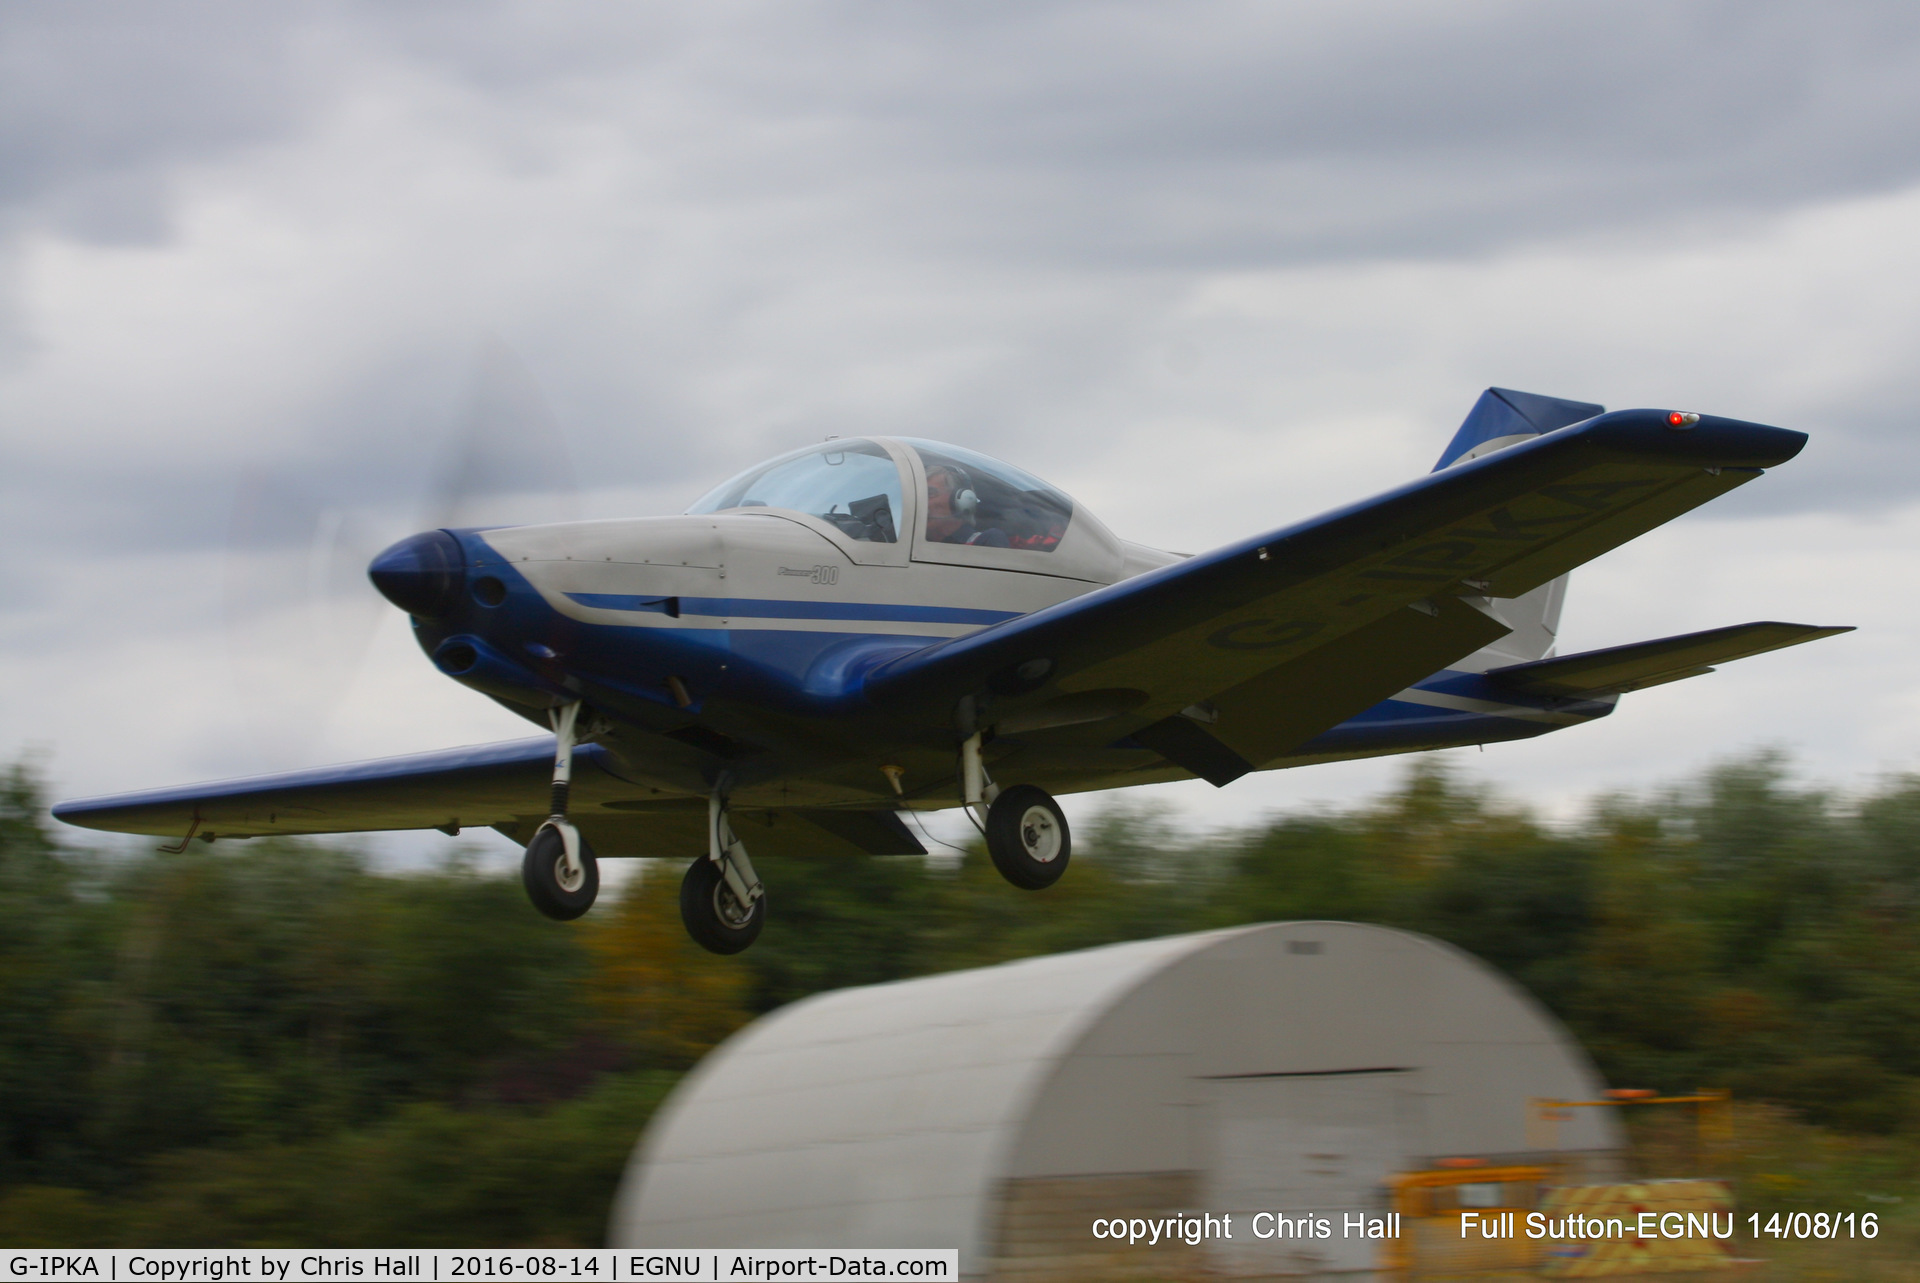 G-IPKA, 2005 Alpi Aviation Pioneer 300 C/N PFA 330-14355, at the LAA Vale of York Strut fly-in, Full Sutton